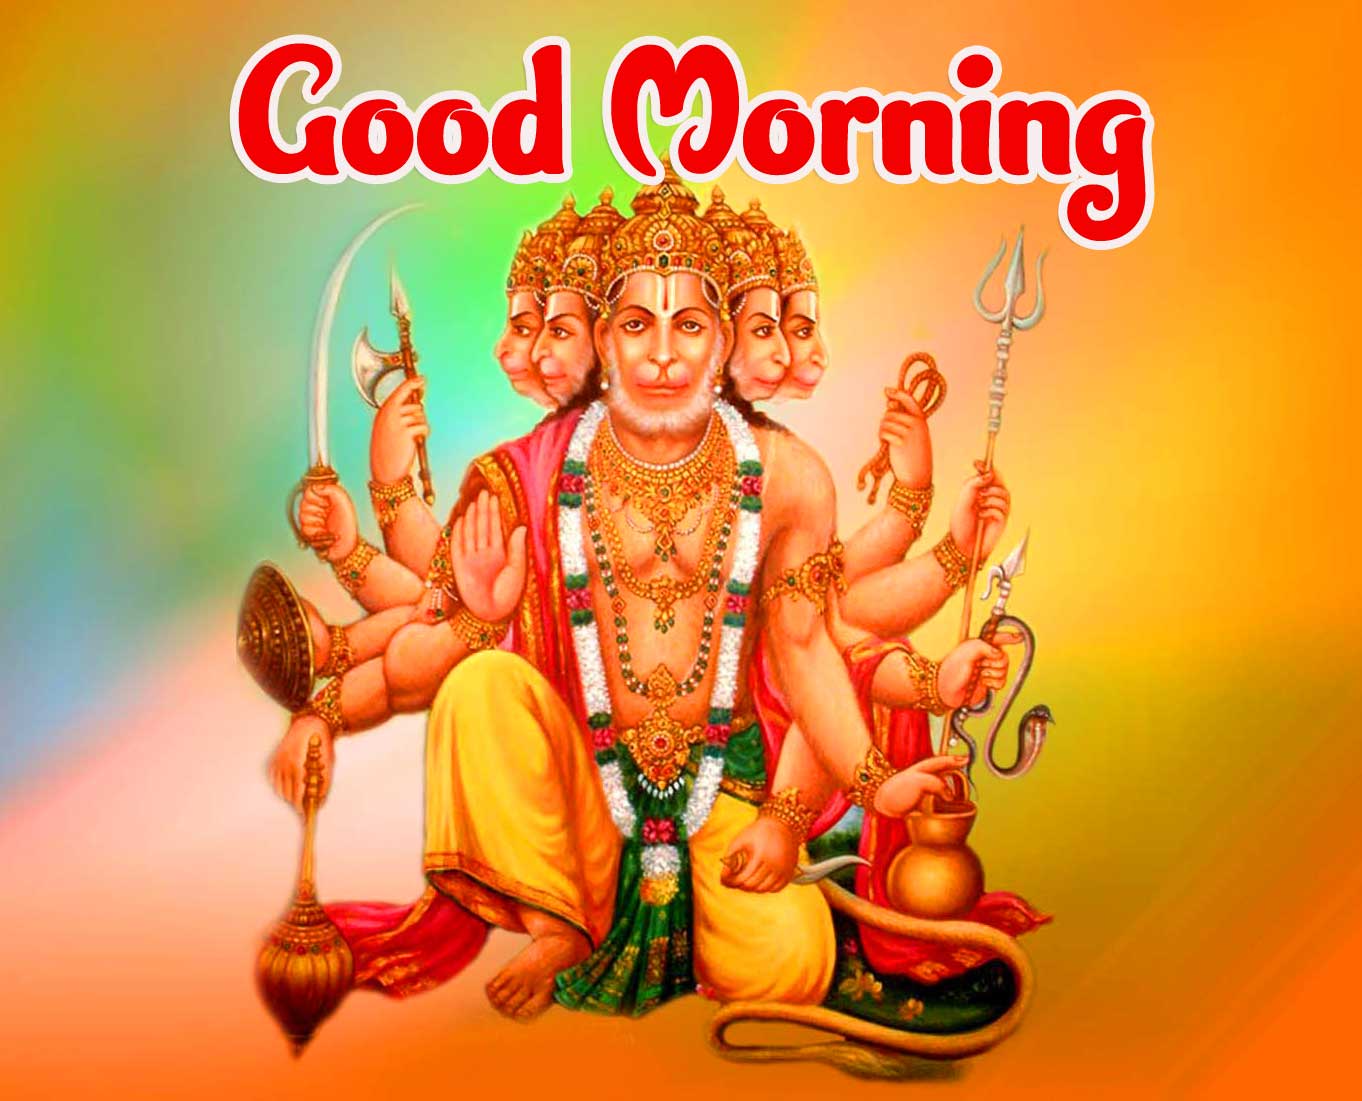 Good Morning Shubh Shanivar Hanuman Ji Images Wallpaper for Facebook 